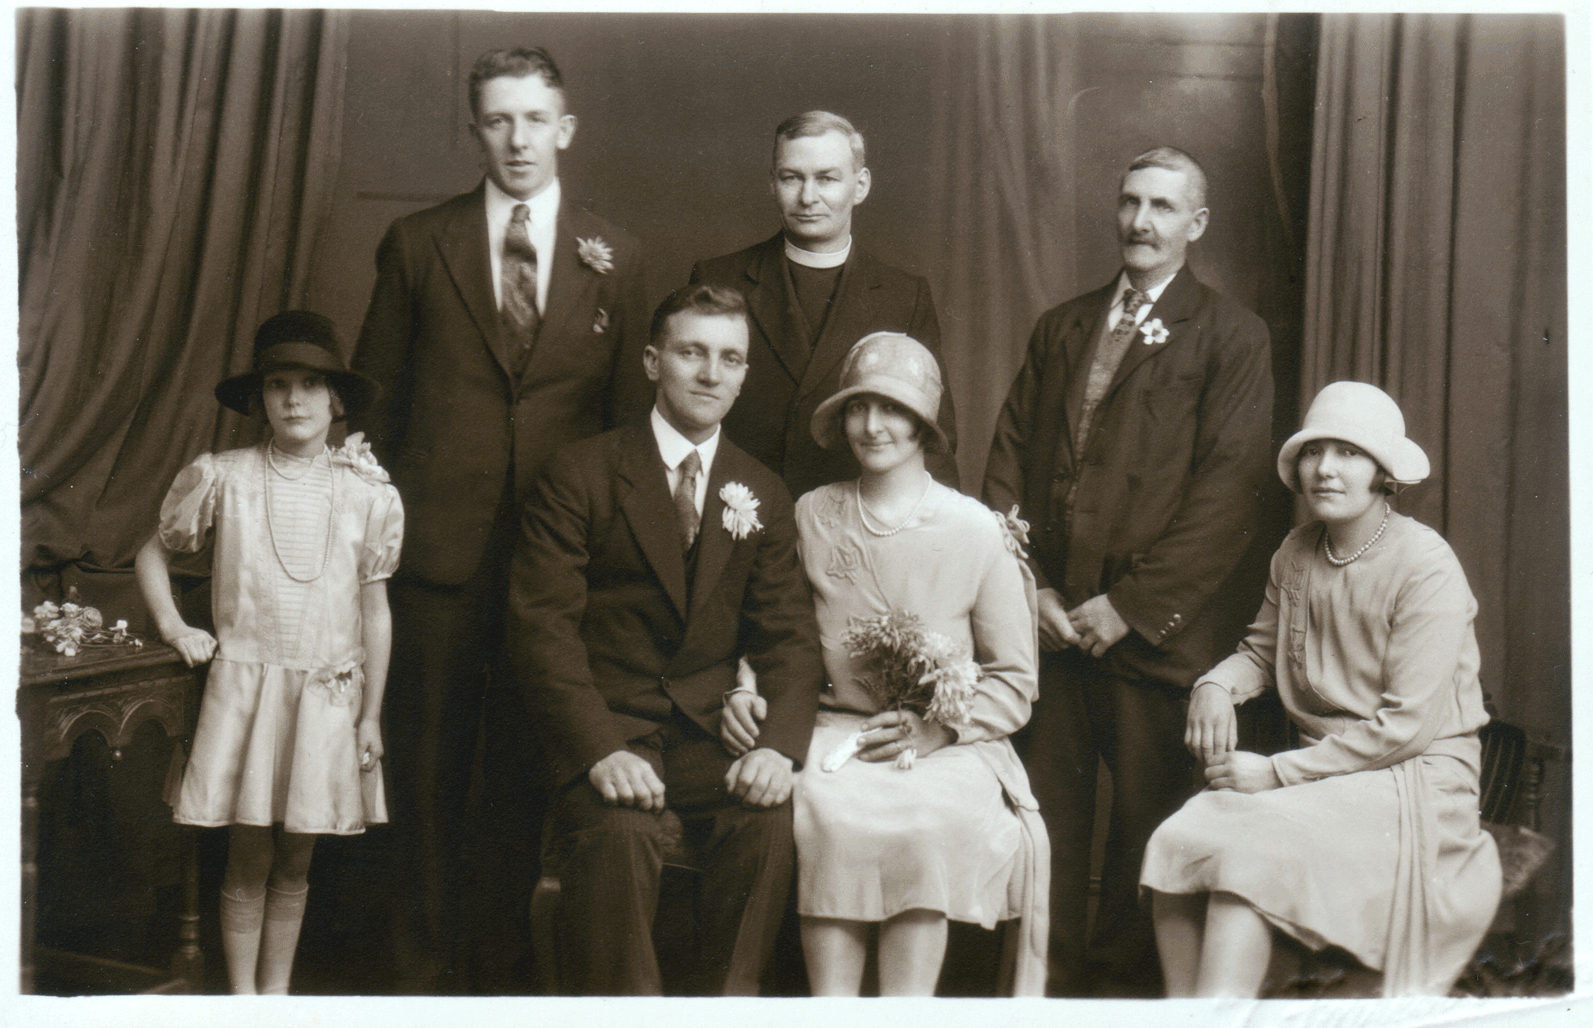 Wedding of David Davies to Catherine Jones on 26 December 1929